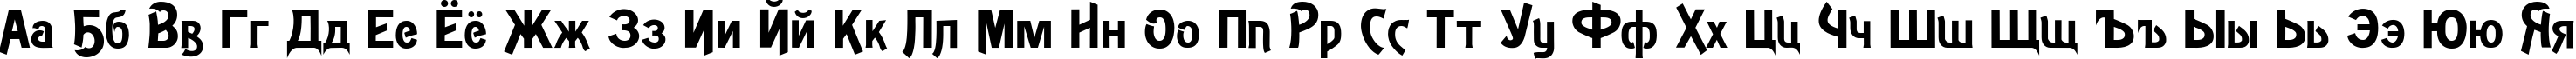 Пример написания русского алфавита шрифтом Theater